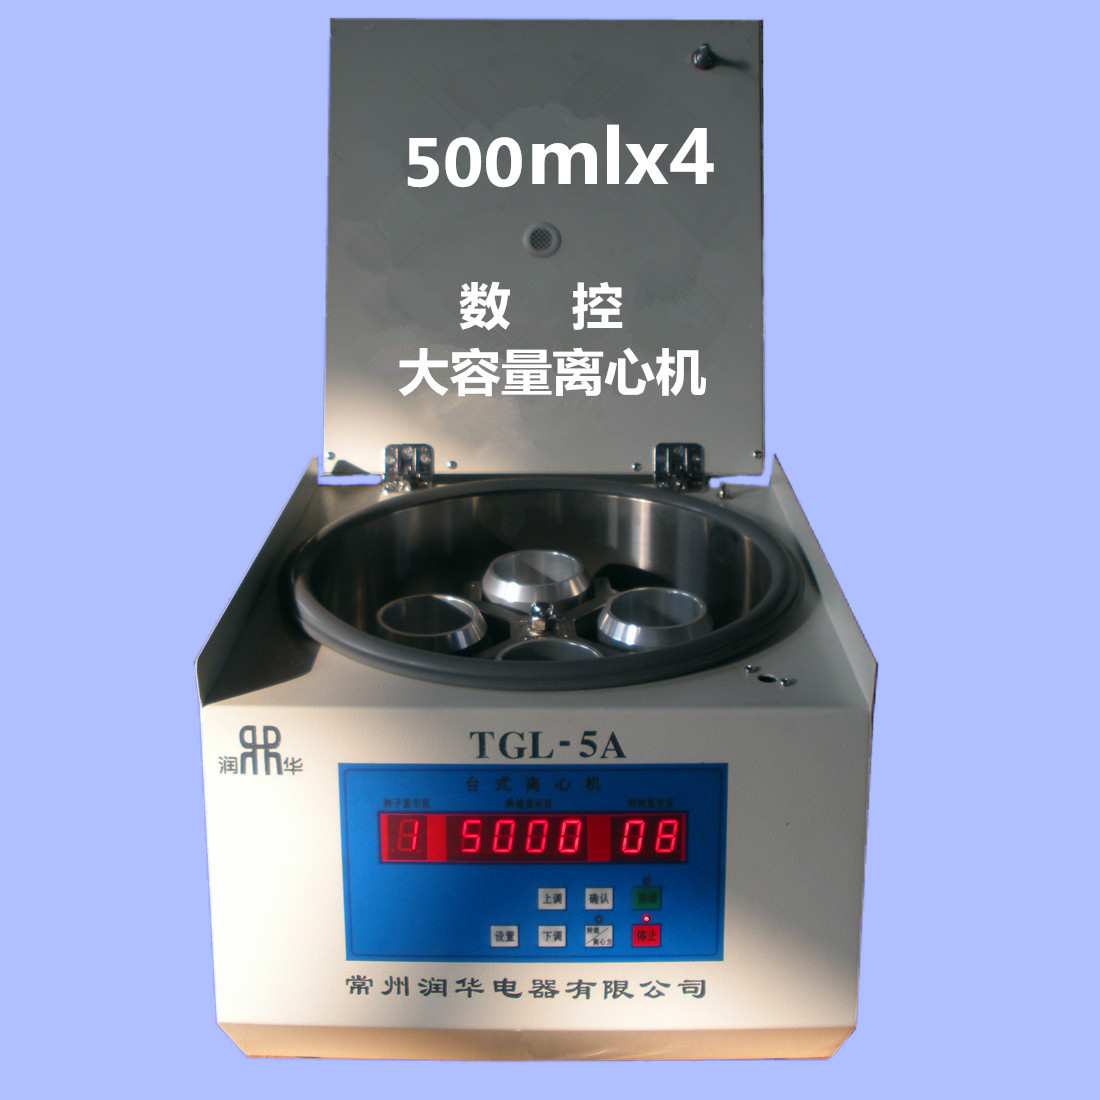 Tgl-5a intelligent speed control digital display timing factory direct sales